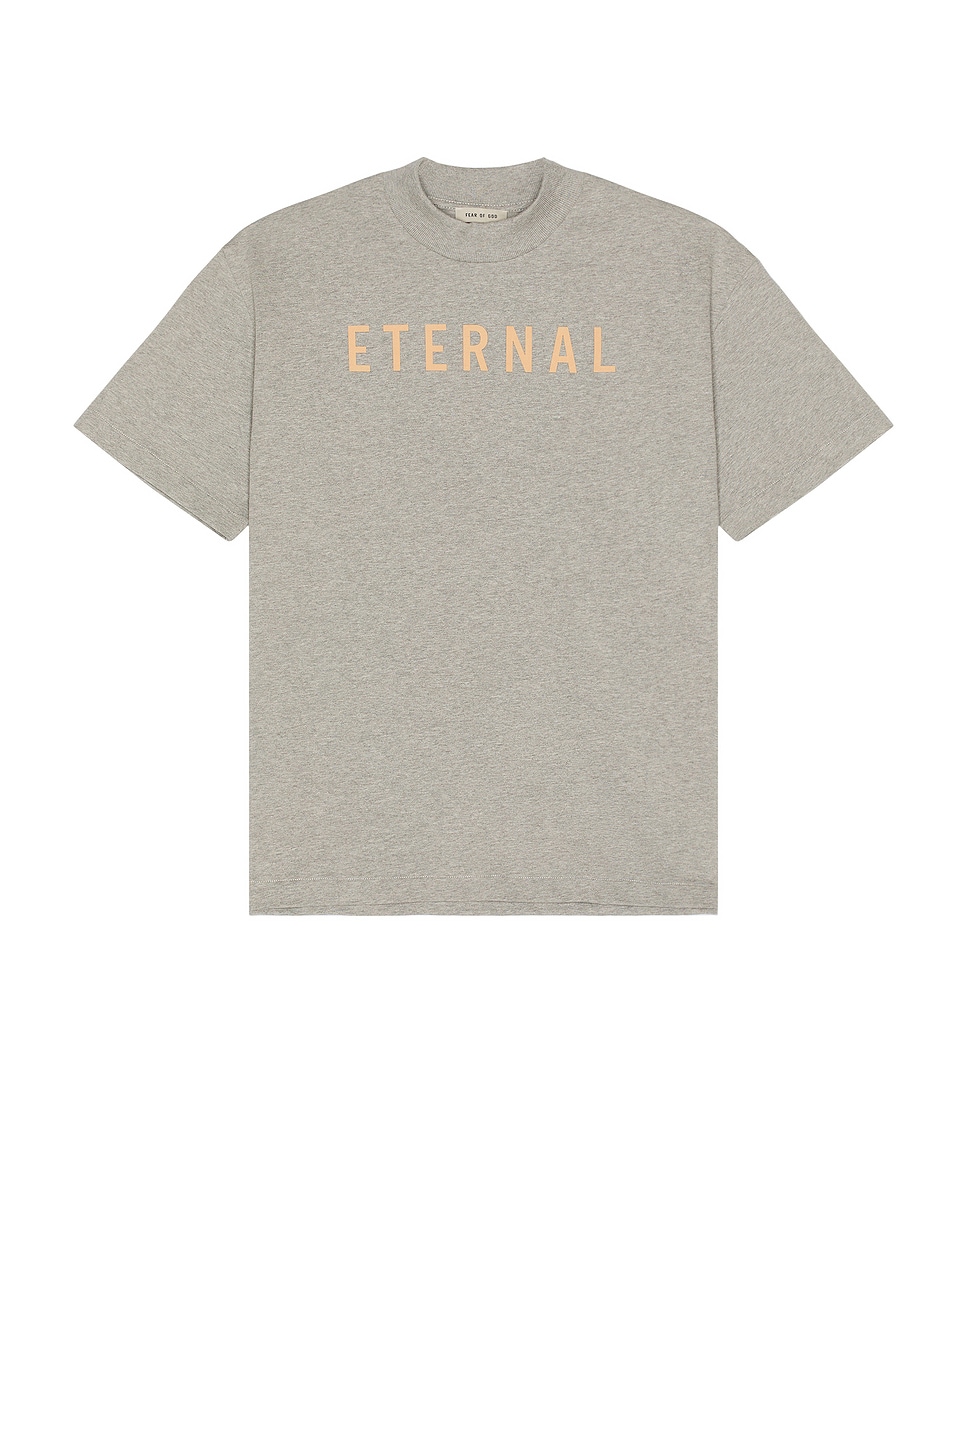 Image 1 of Fear of God Eternal T Shirt in Warm Heather Grey